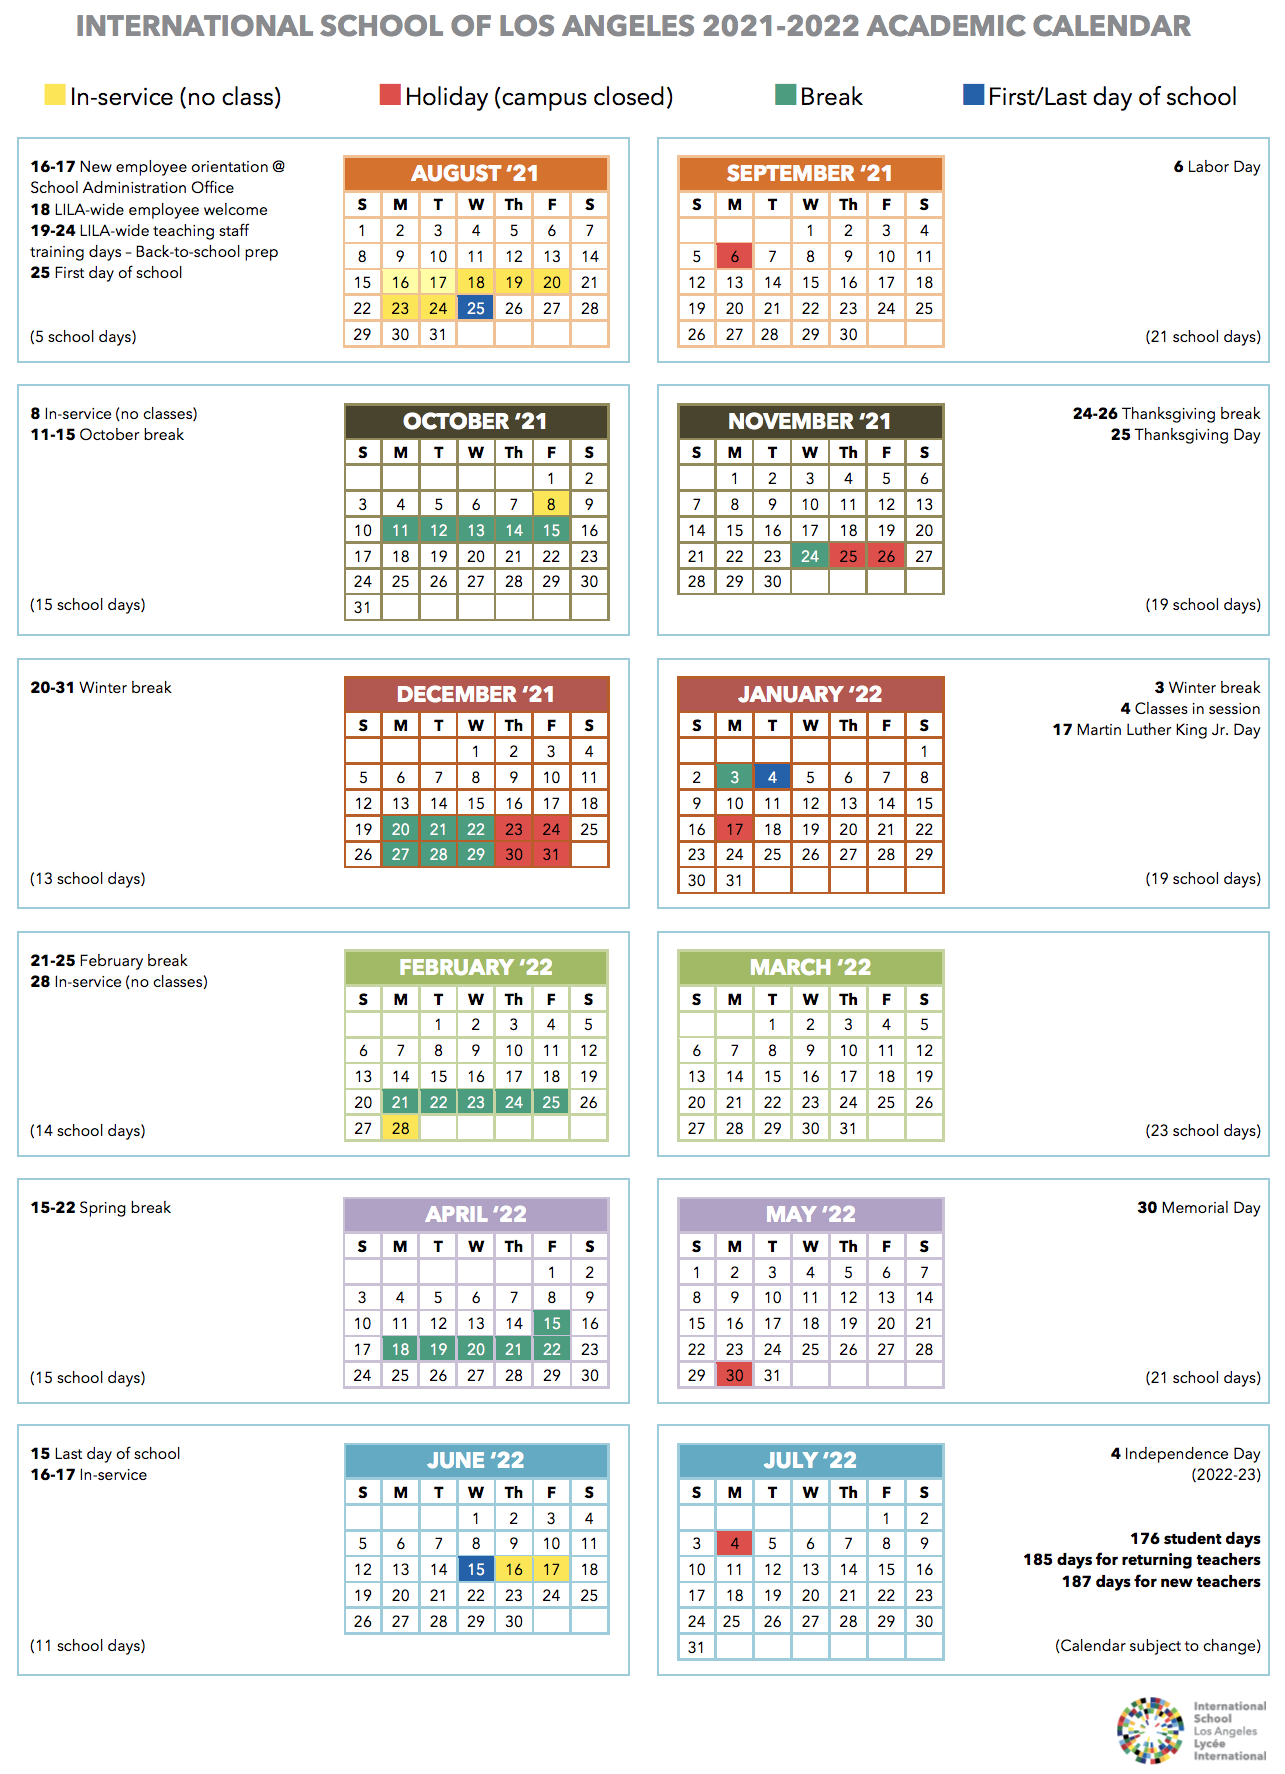 Csulb Calendar 2022 Calendar | International School Of Los Angeles